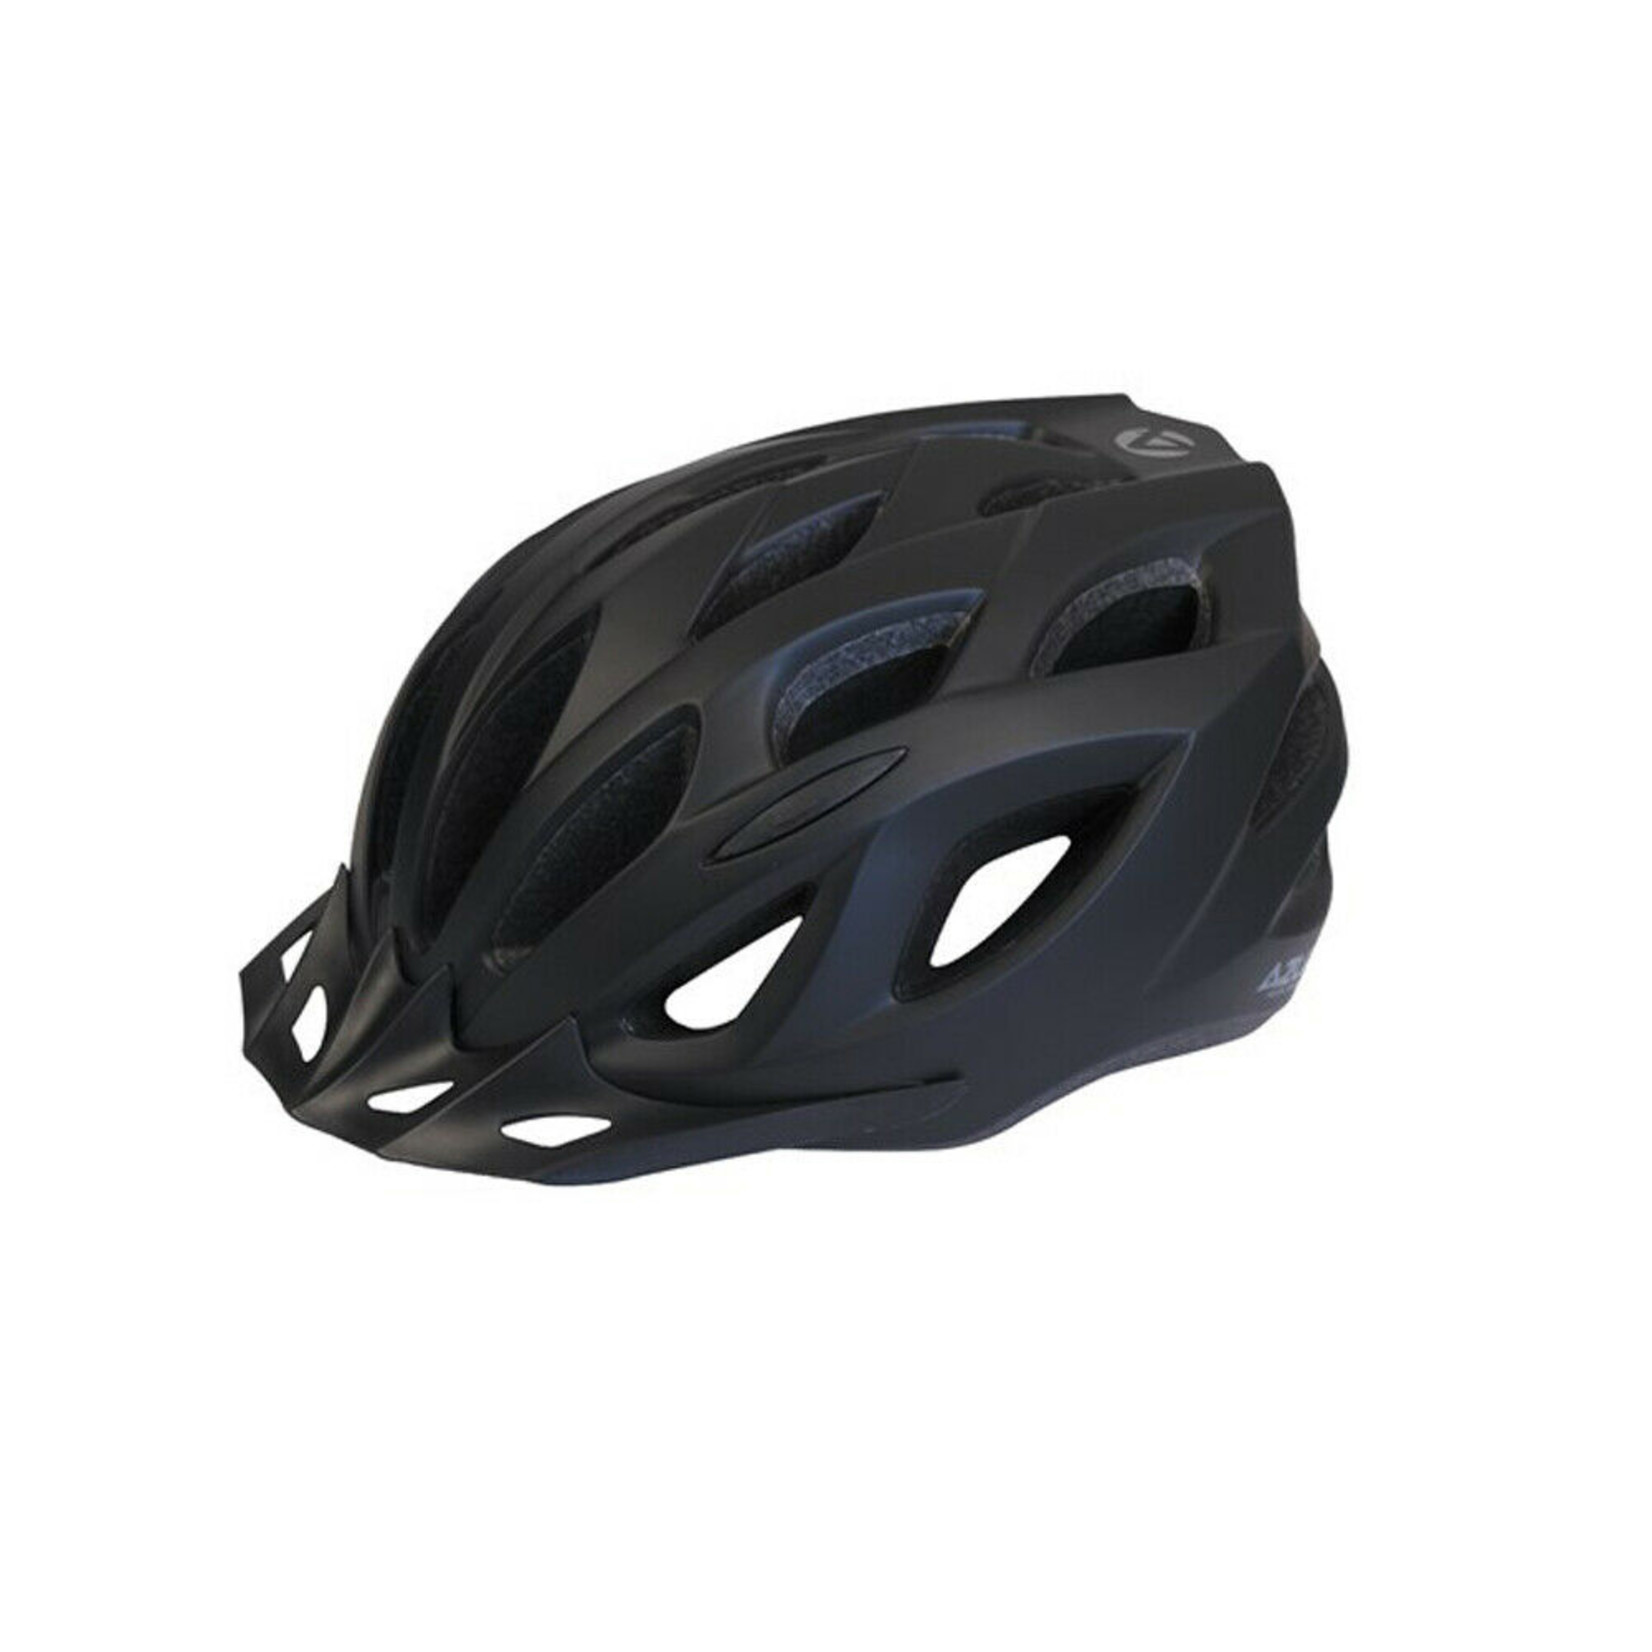 Azur Azur Bike Helmet - L61 Series - Satin Black Lightweight In-Mould Shell